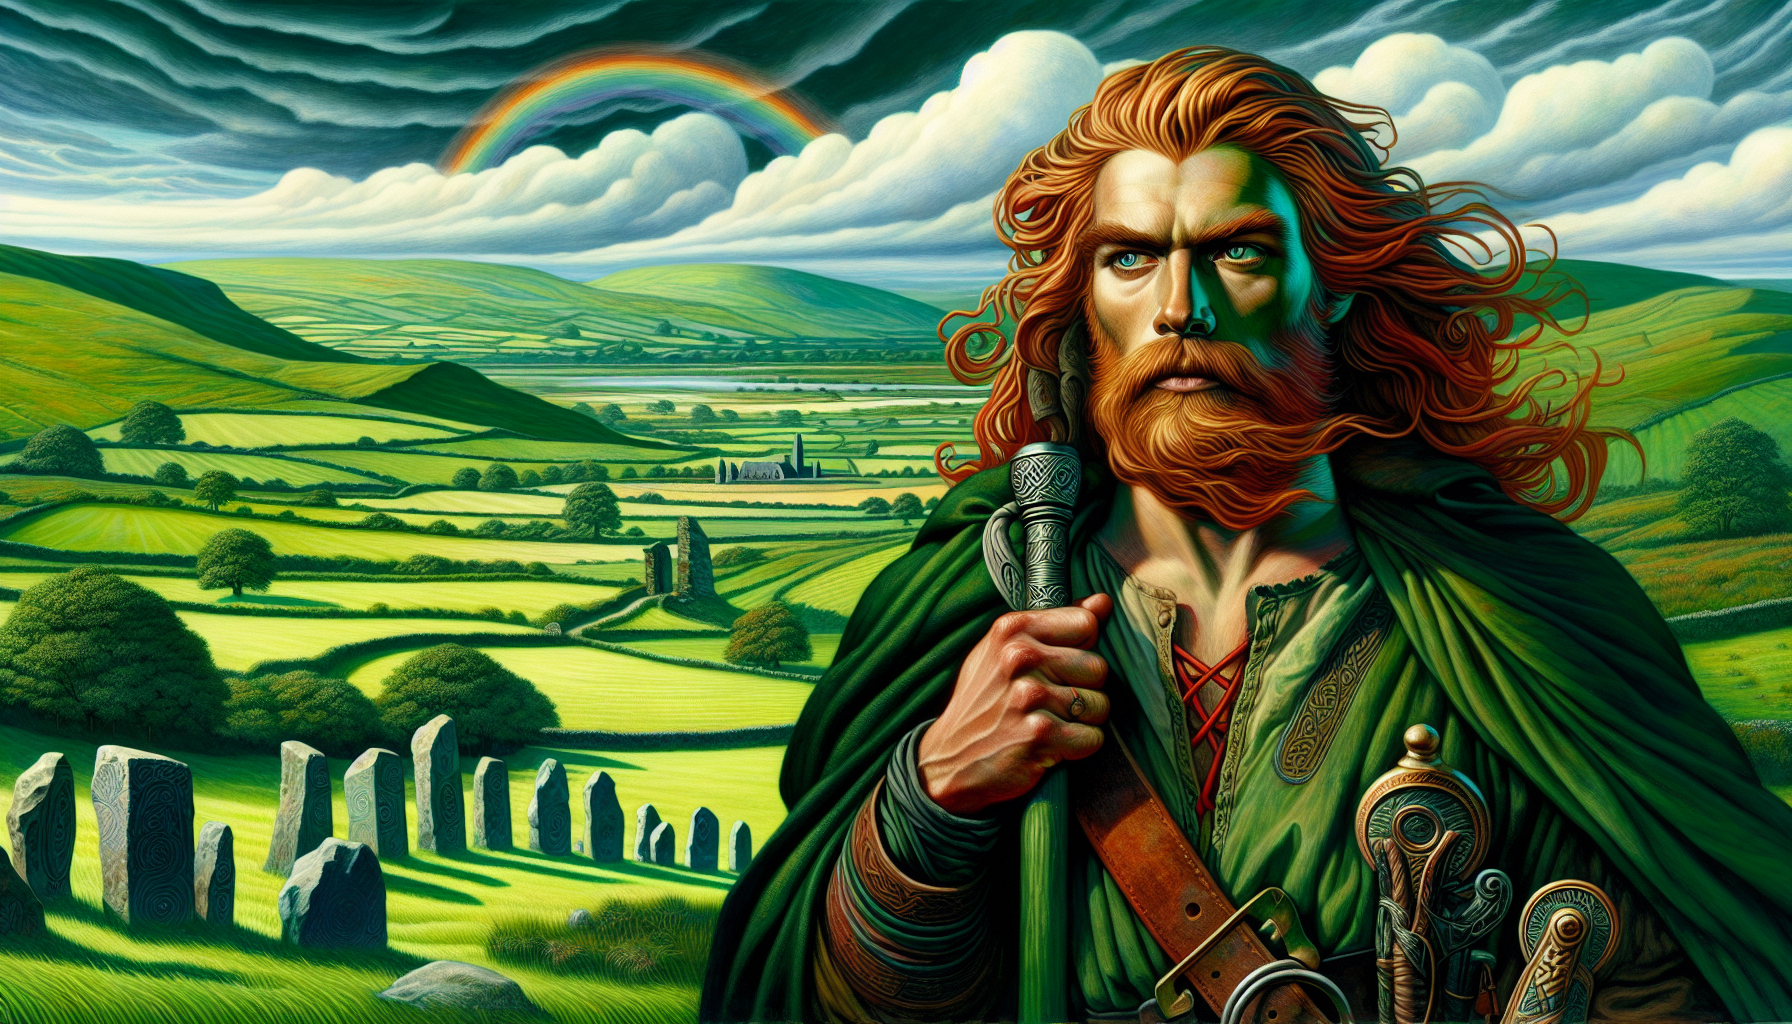 Illustration of Finn McCool in the Irish countryside